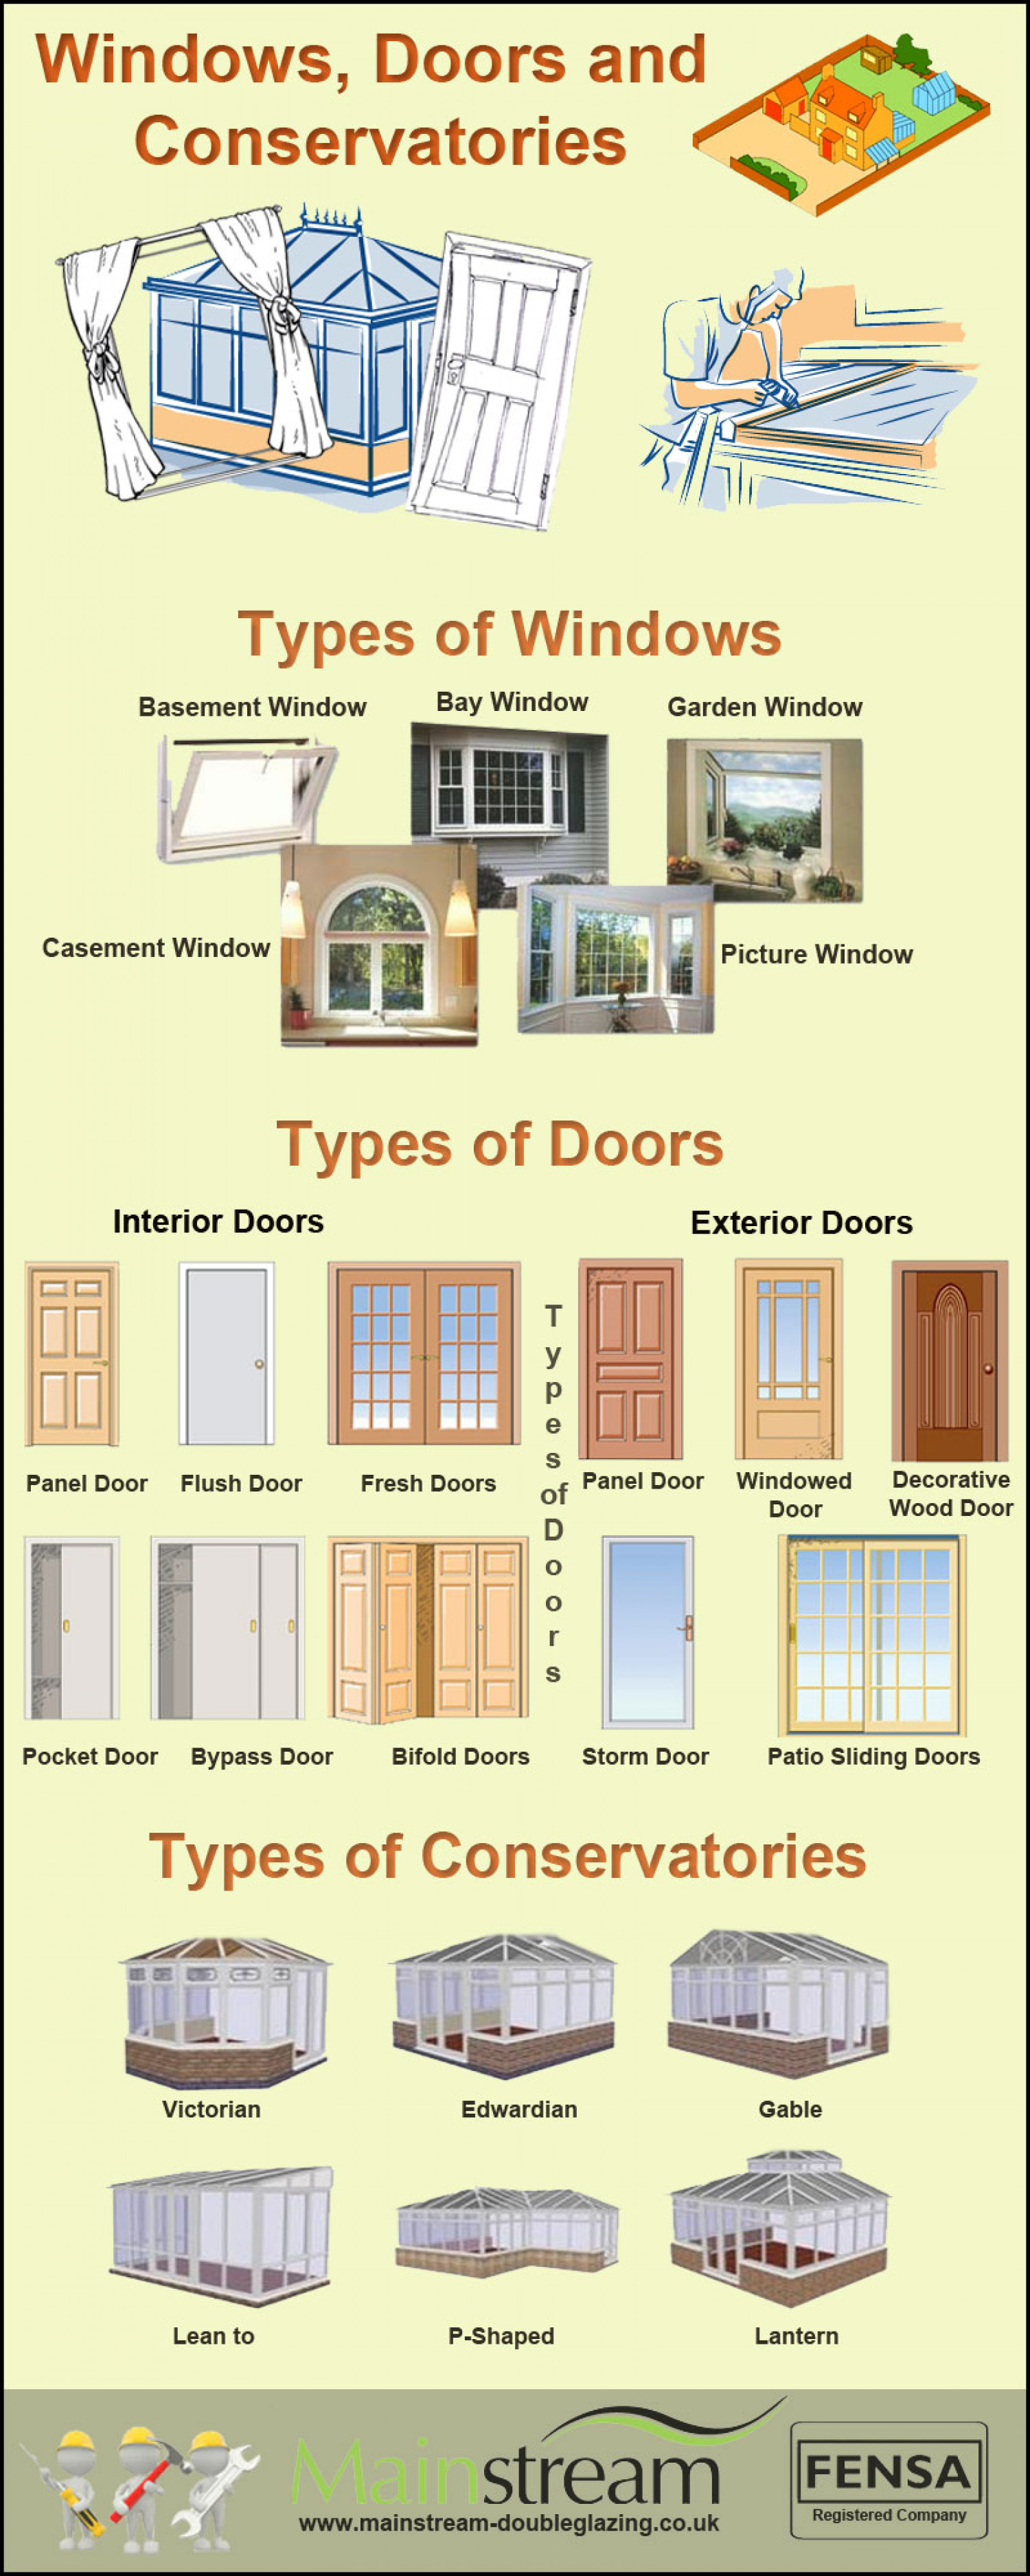 Windows, doors and conservatories Infographic